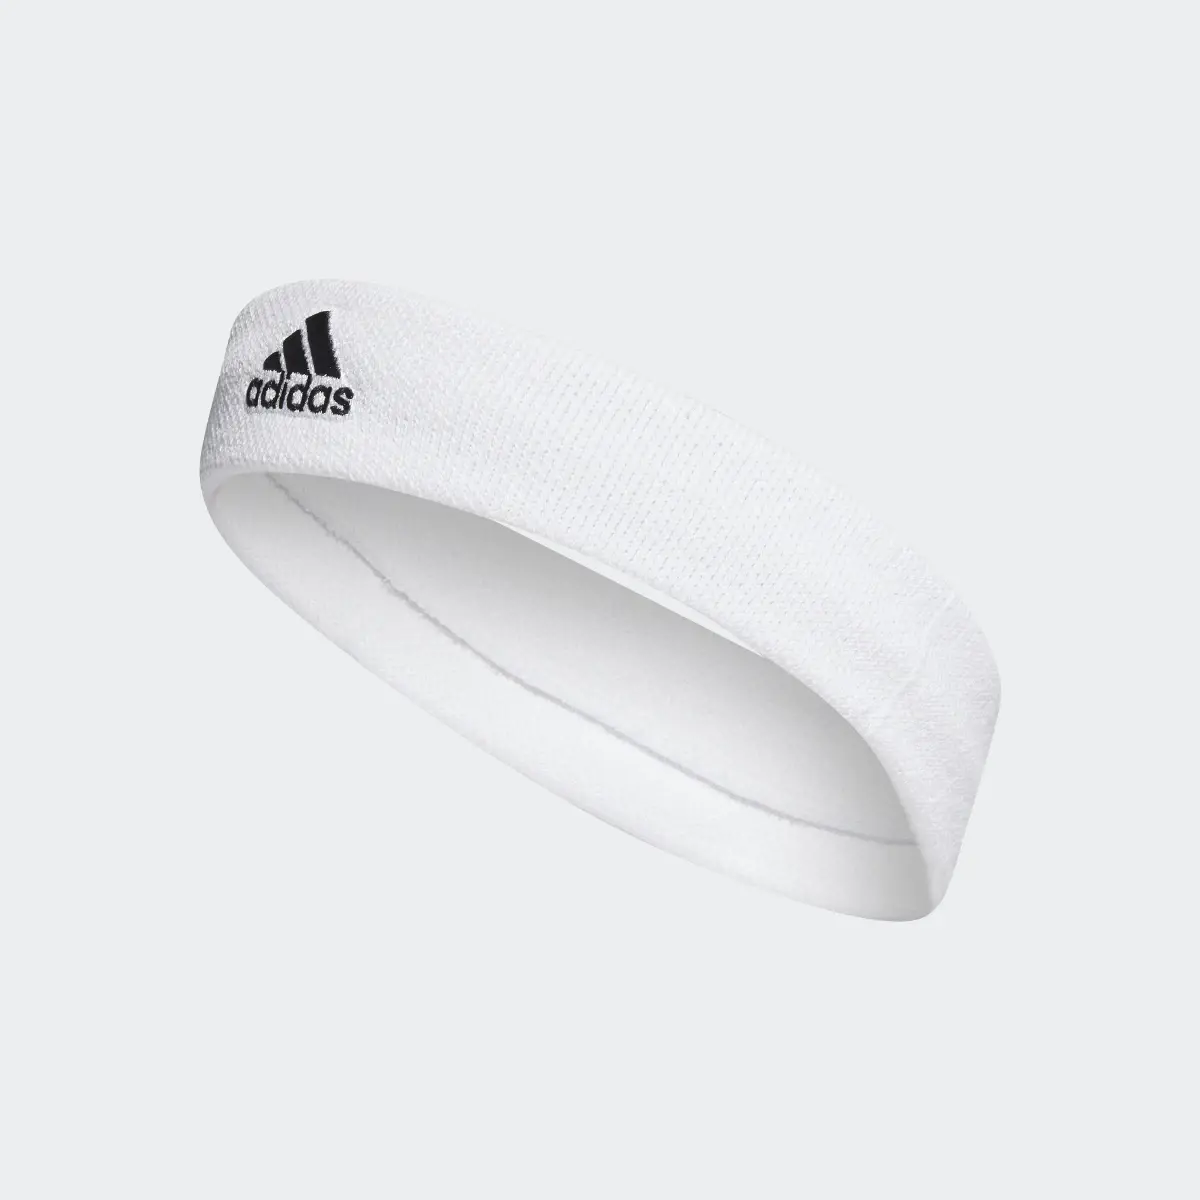 Adidas Tennis Headband. 2